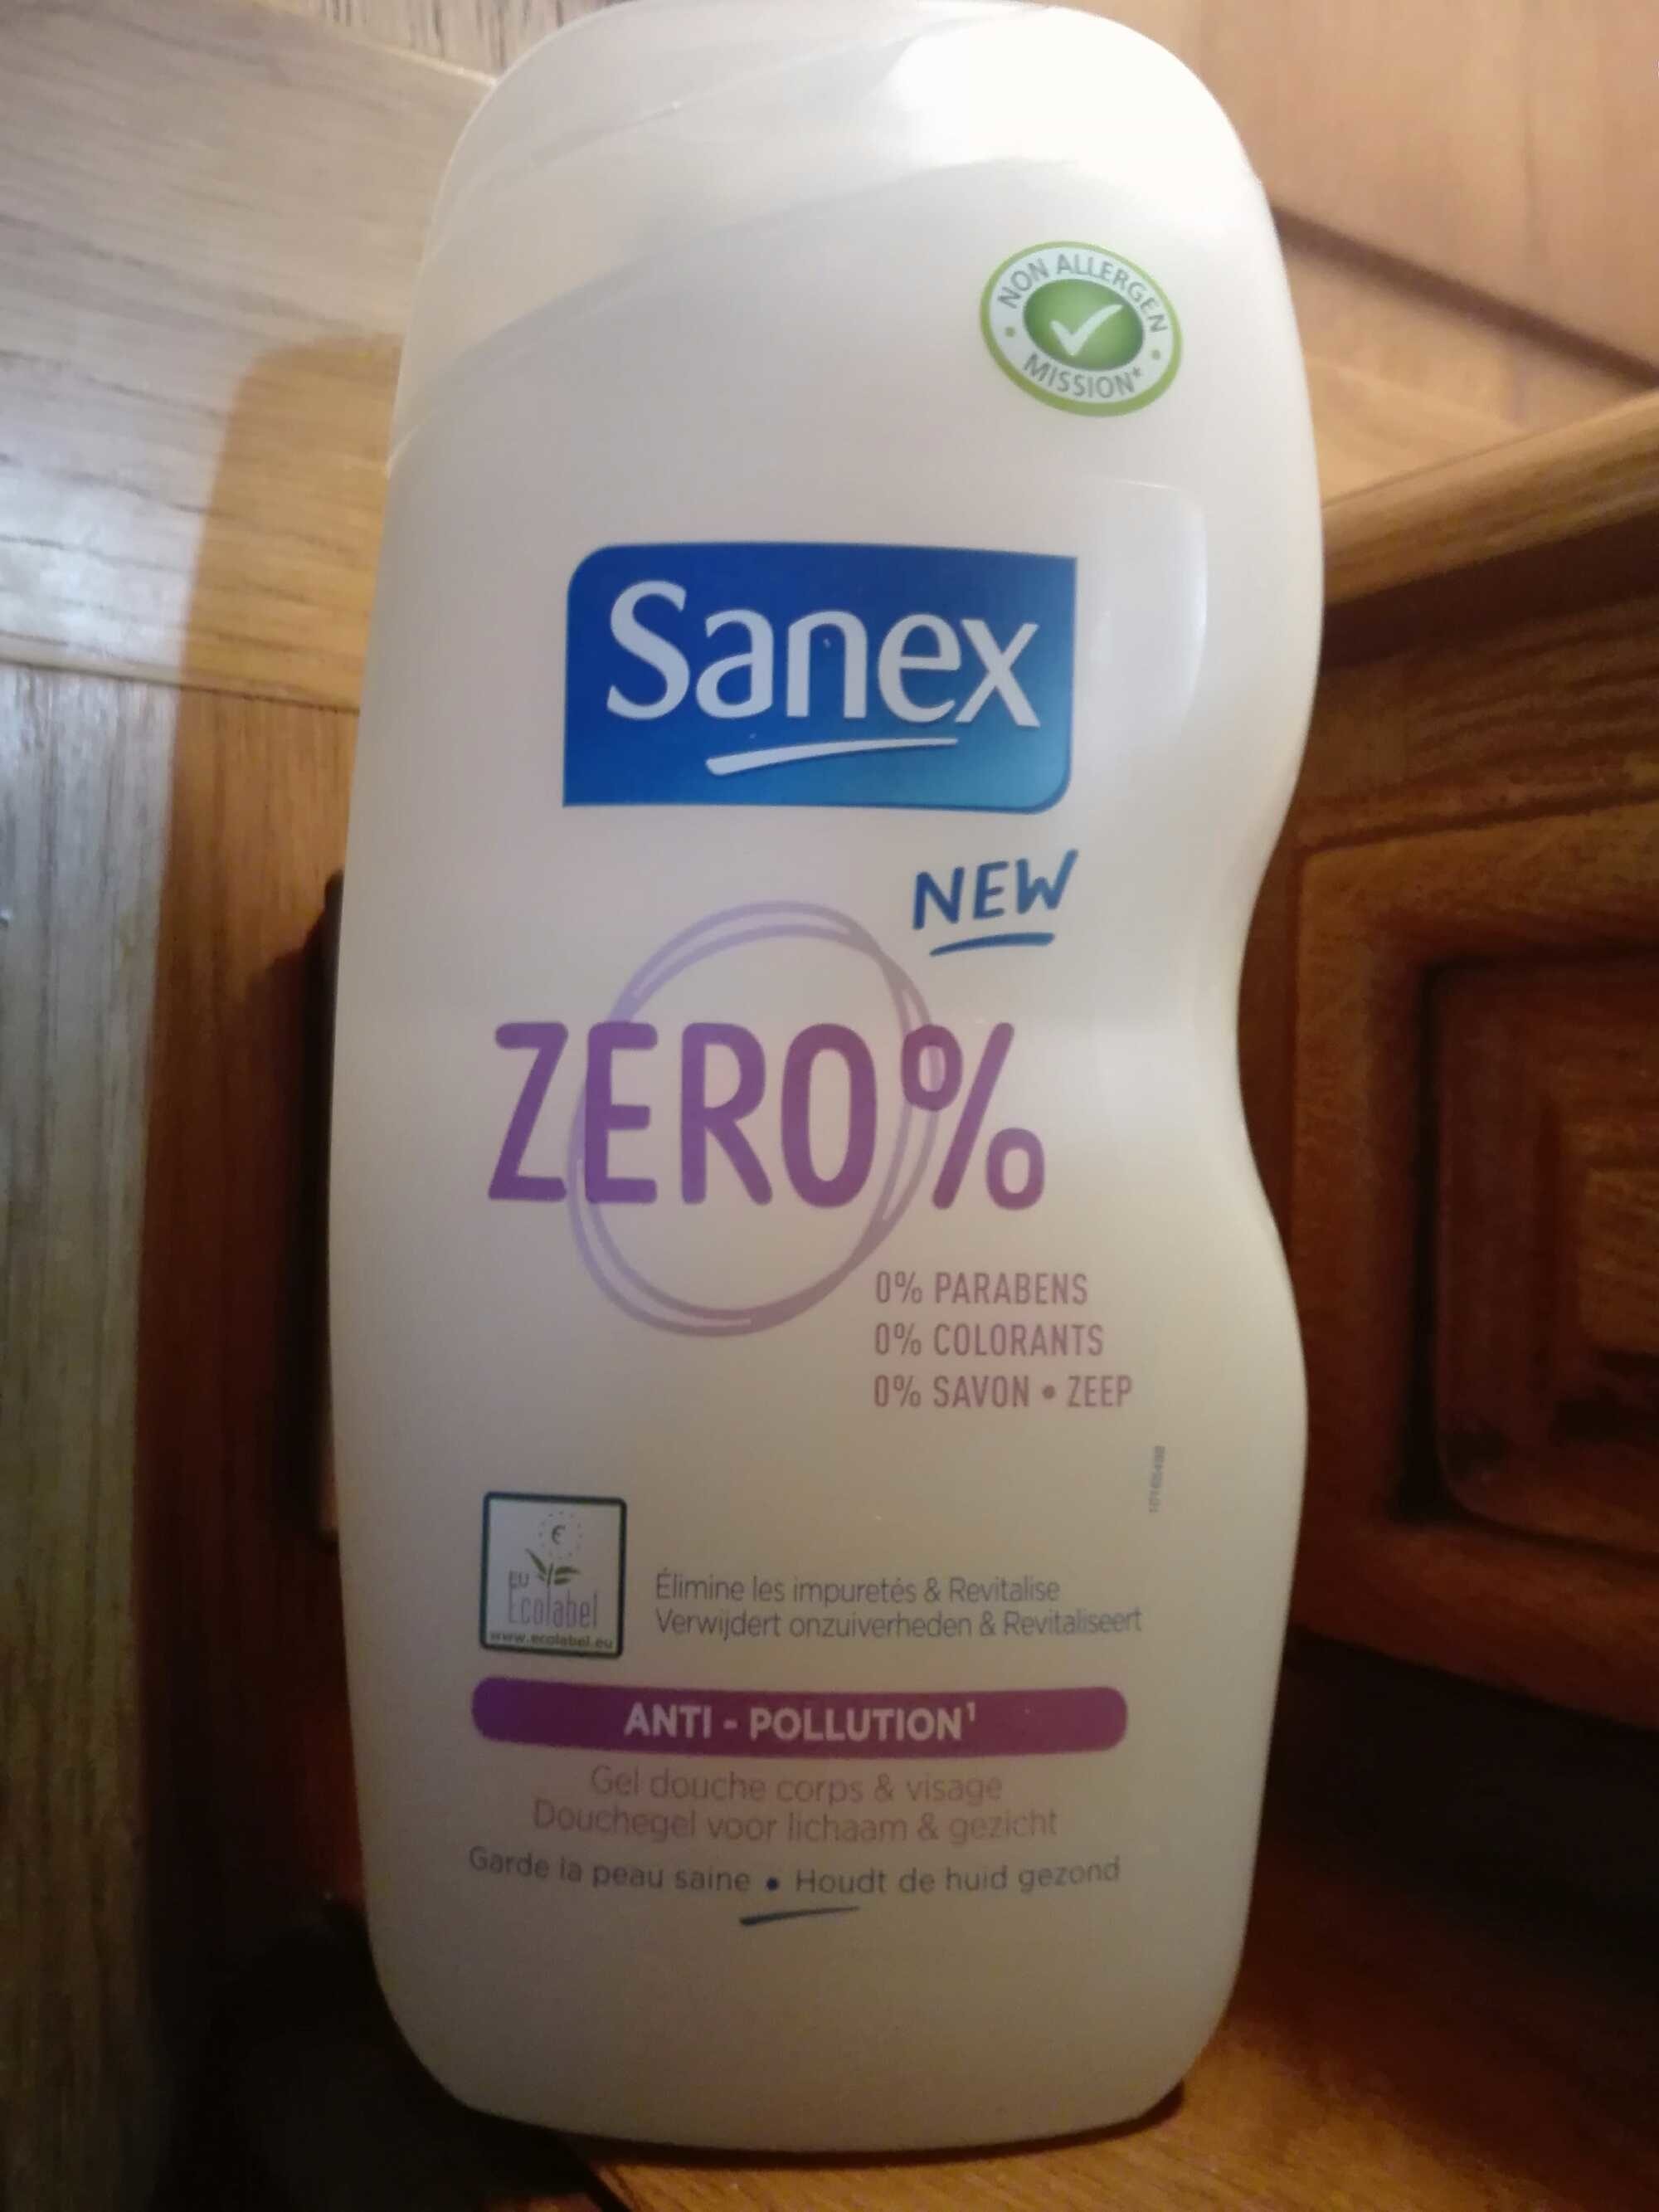 Sanex Zéro% Anti-pollution - Product - fr